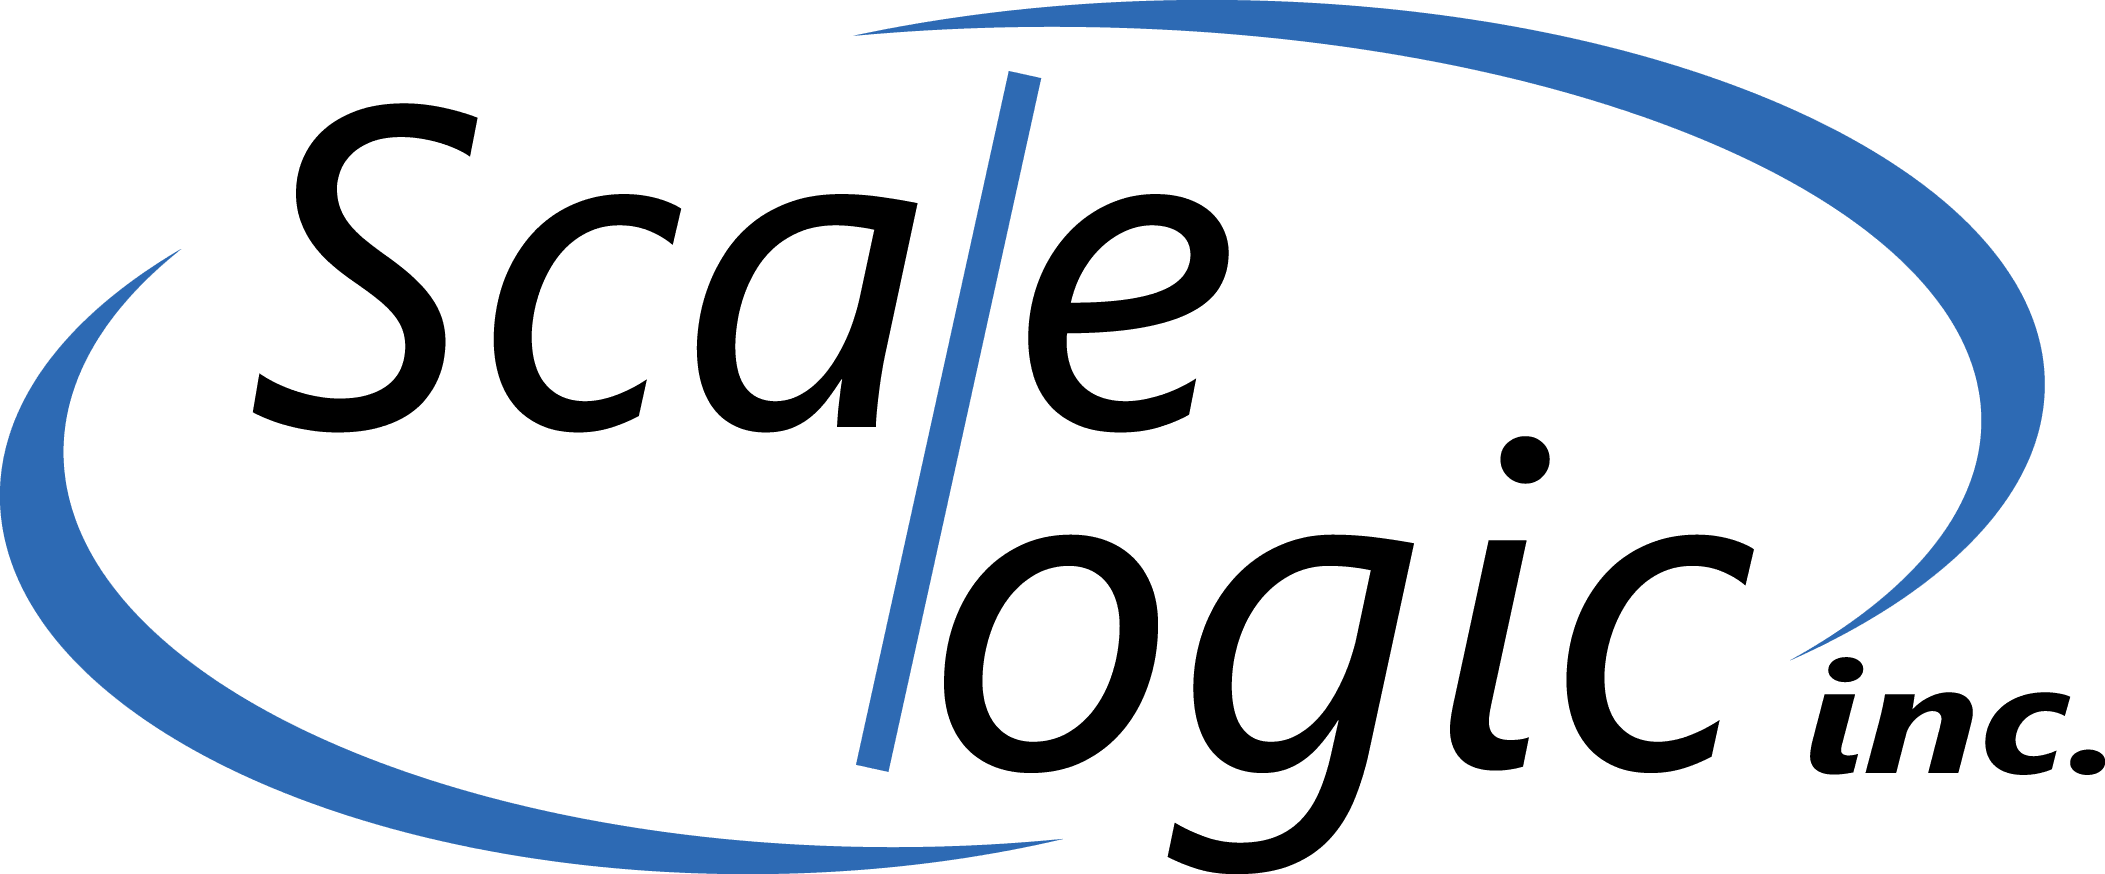 scale logic logo